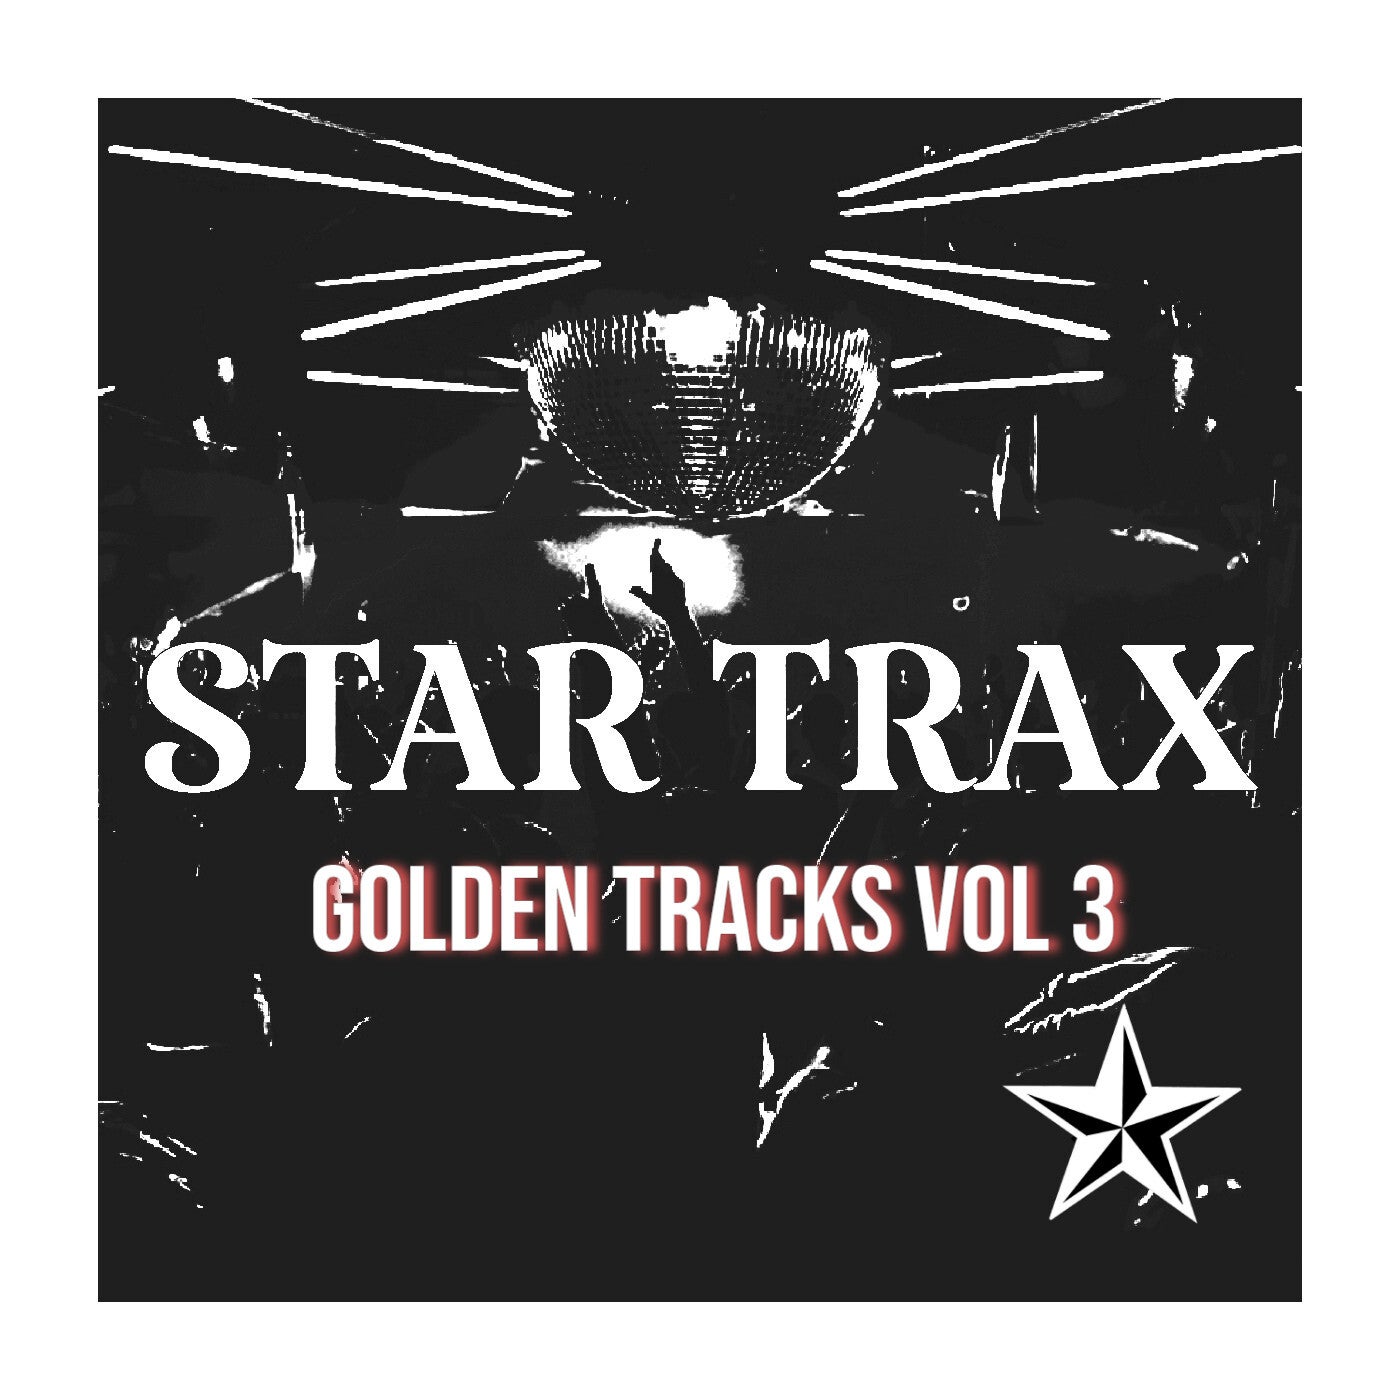 GOLDEN TRACKS VOL 3 (BEST OF STAR TRAX)